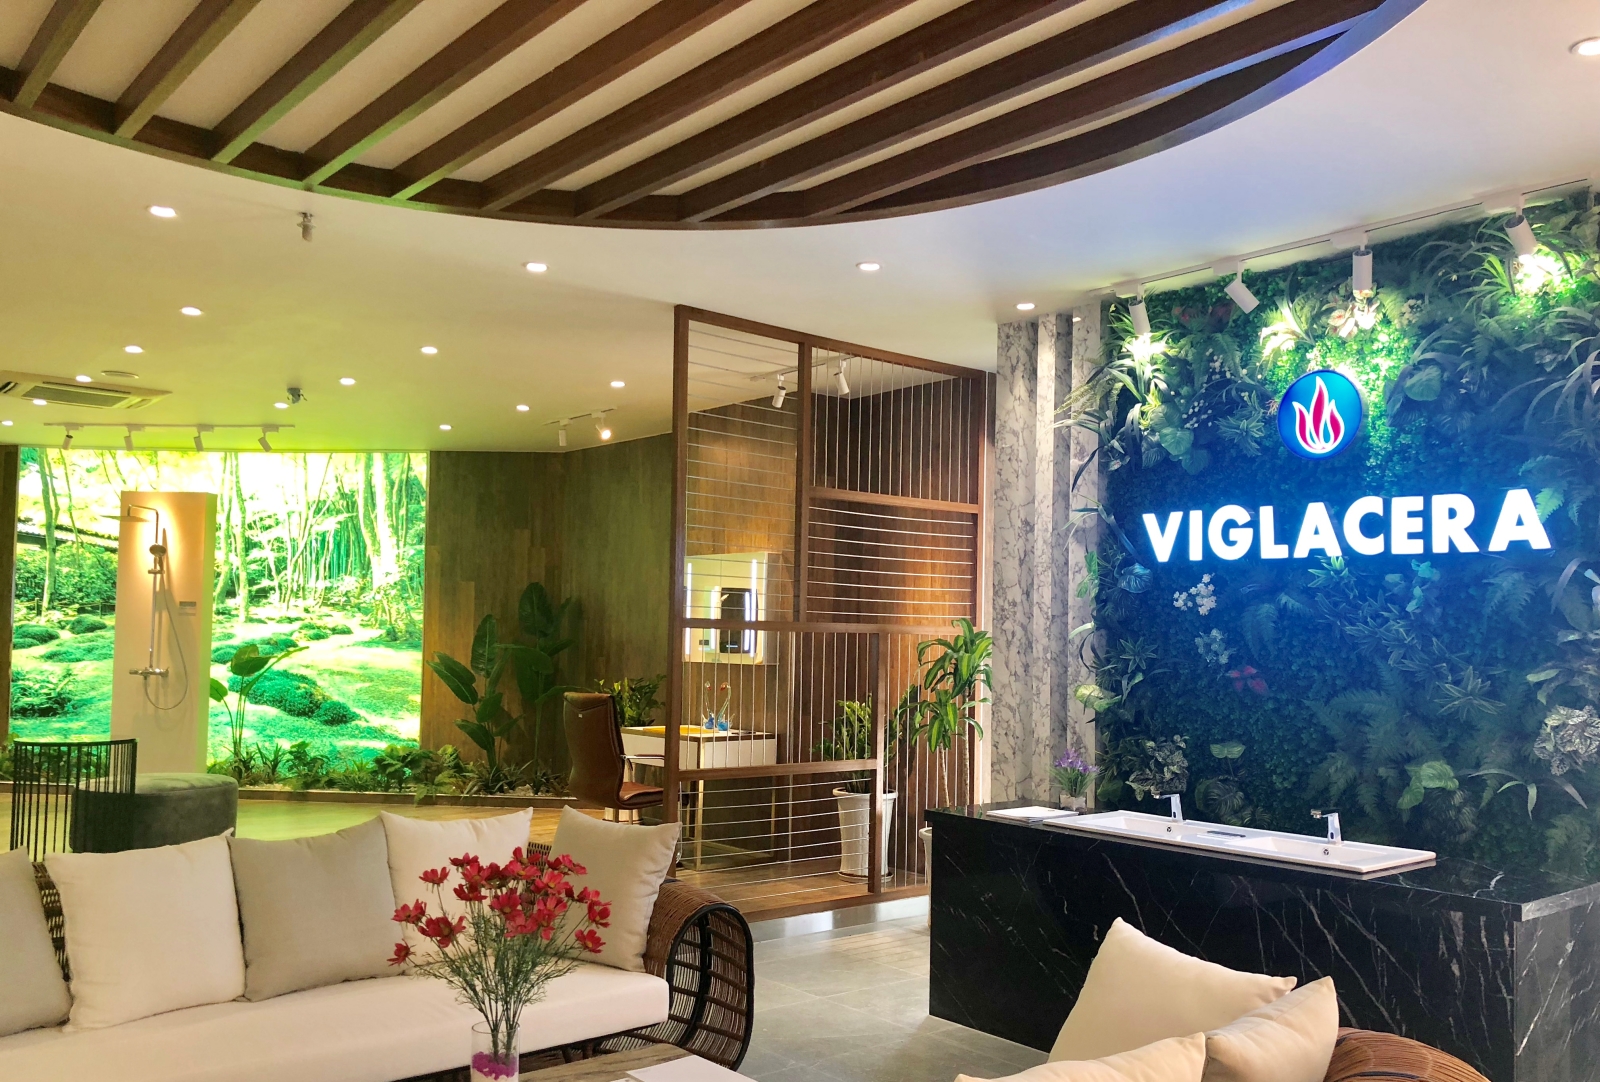 Viglacera inaugurated Showroom inside Viglacera building – No 1, Thang Long Street, Hanoi